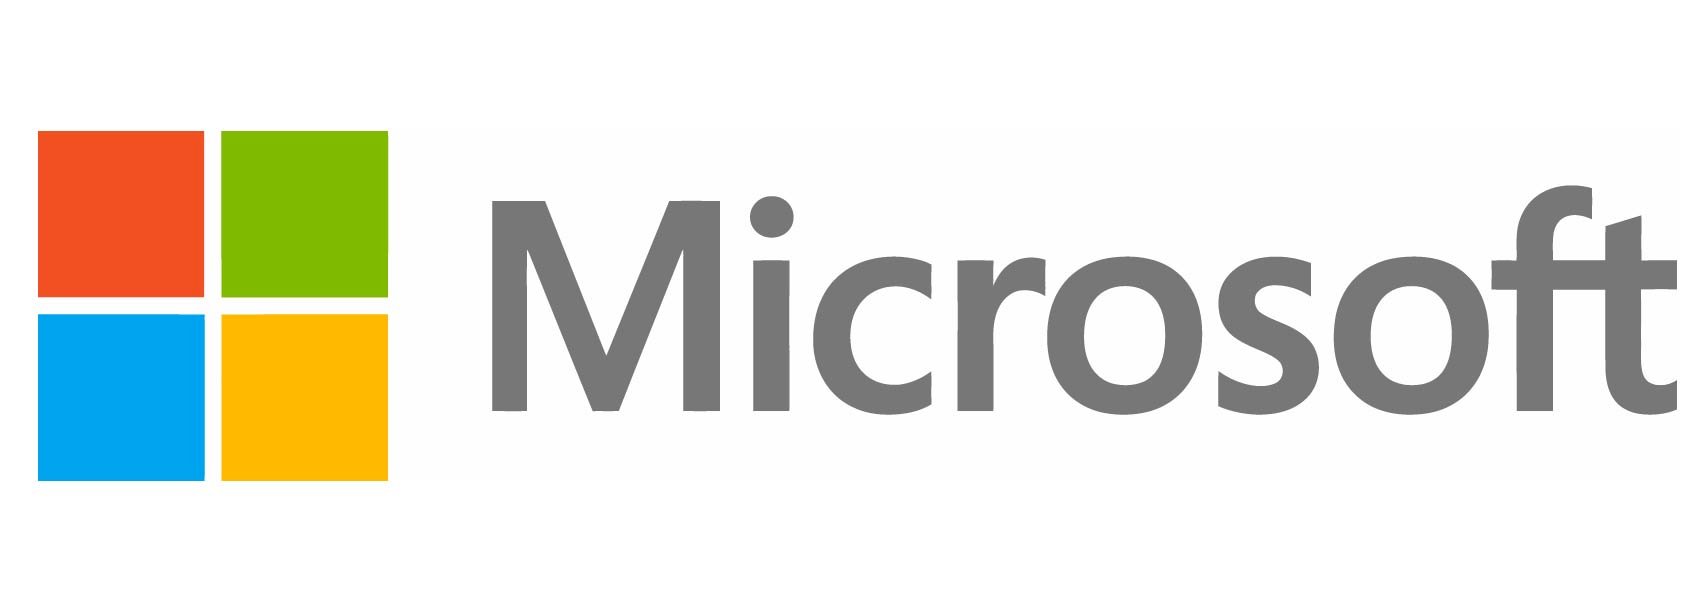 Tải Mẫu Logo Microsoft File Vector Ai, Eps, Jpeg, Svg, Png